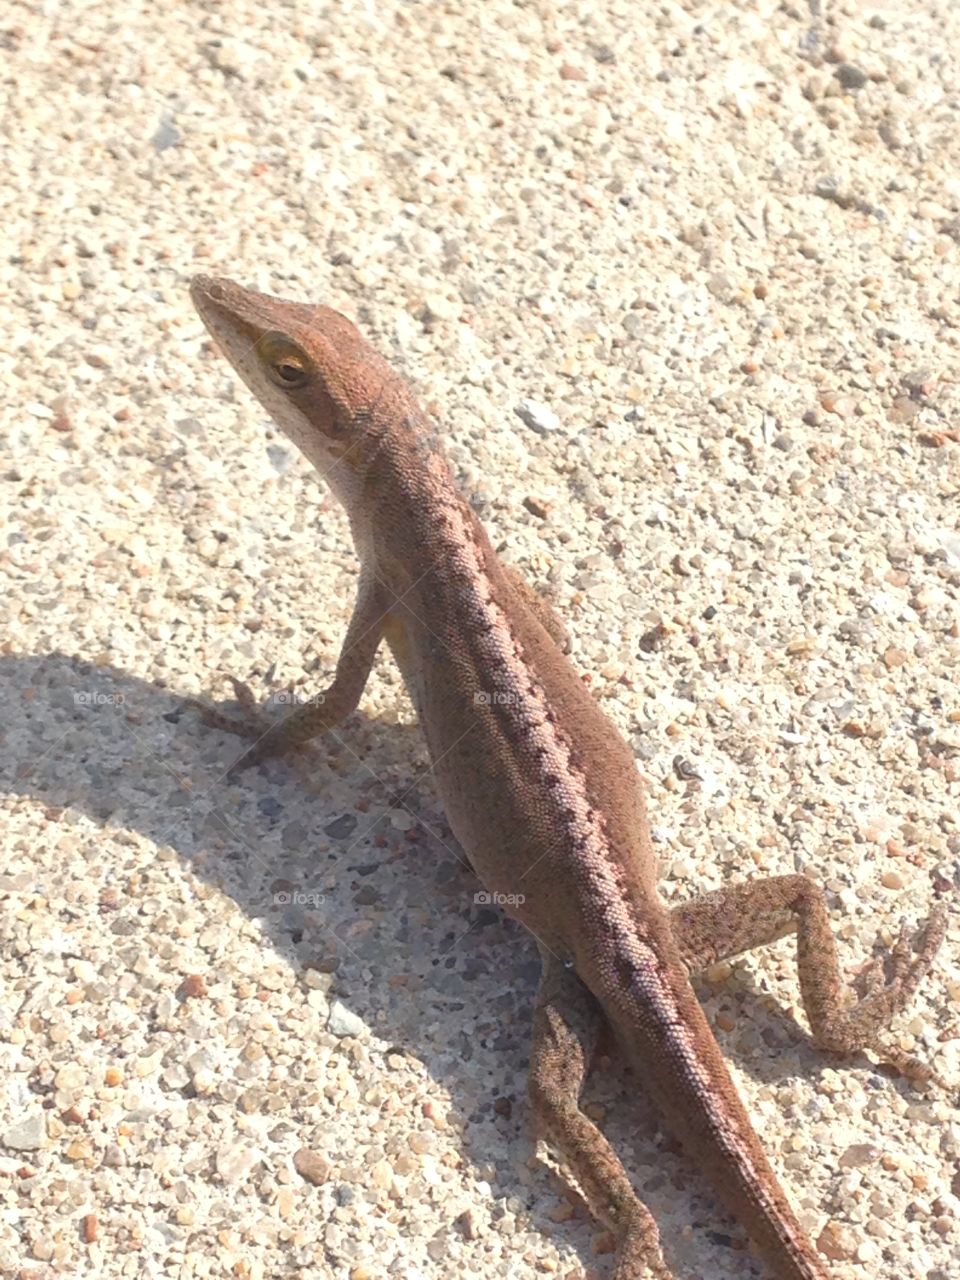 Gimme some sun . A lizard sunning in the sidewalk